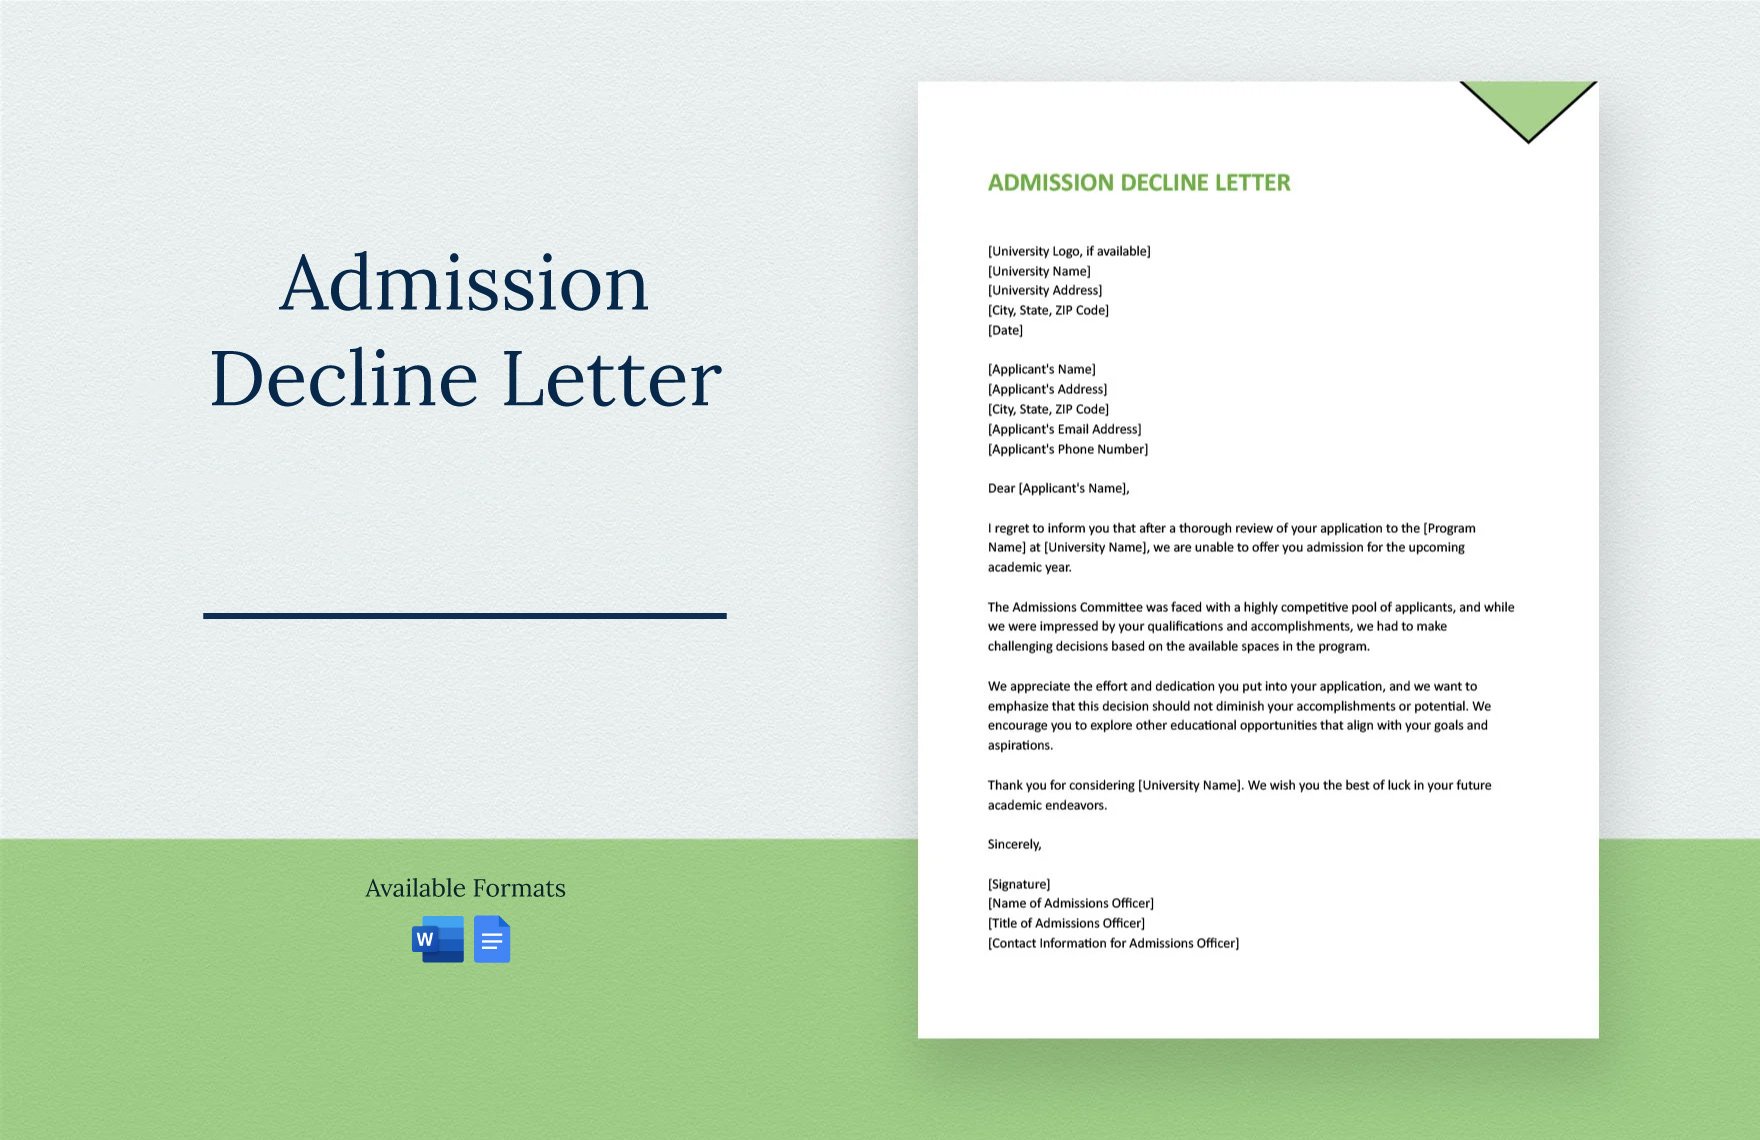 Admission Decline Letter in Word, Google Docs